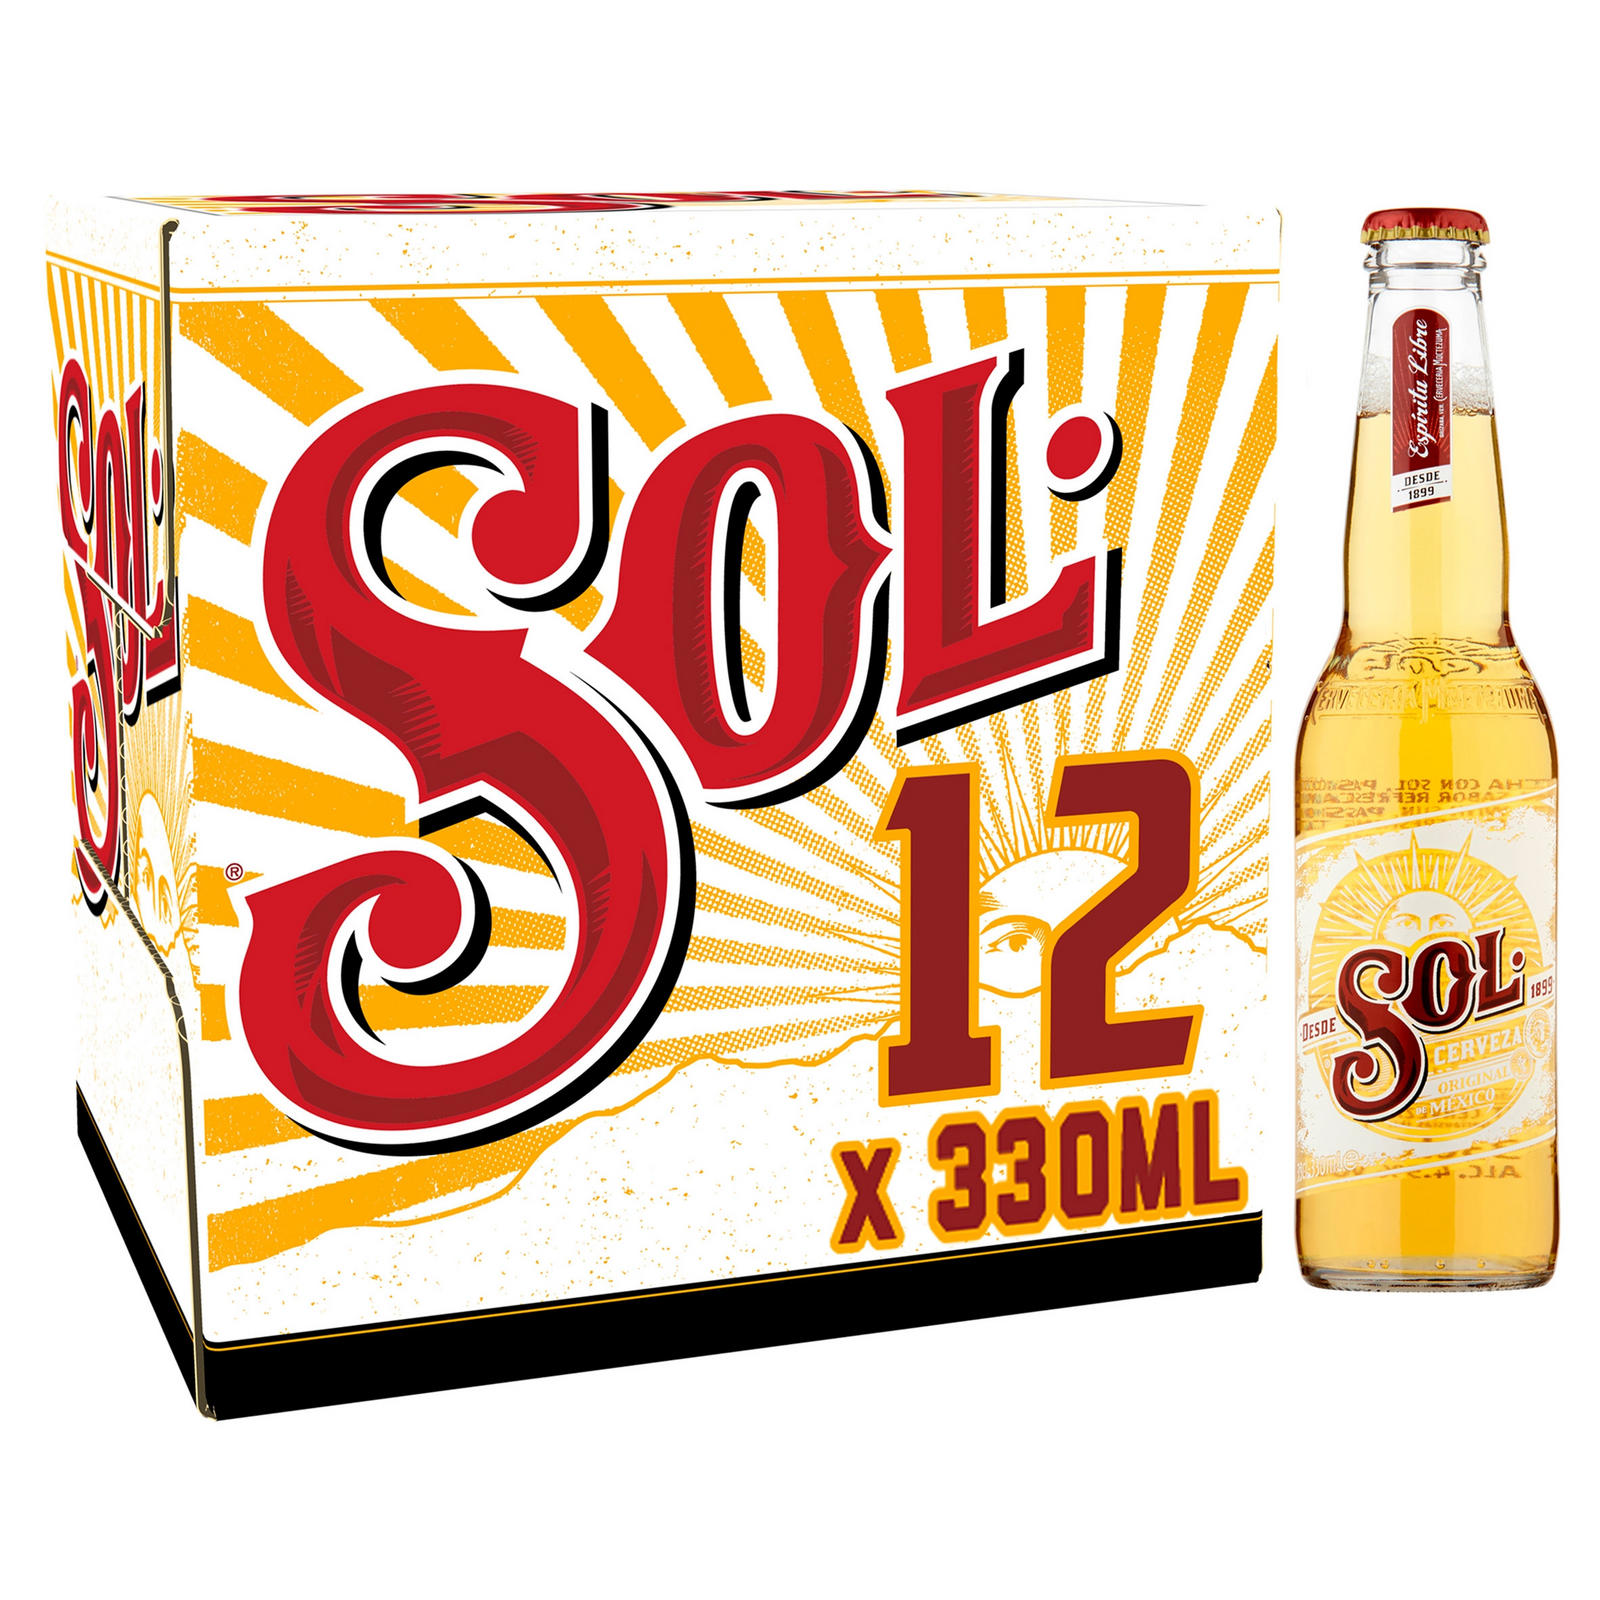 sol-original-lager-beer-12-x-330ml-bottles-beer-iceland-foods